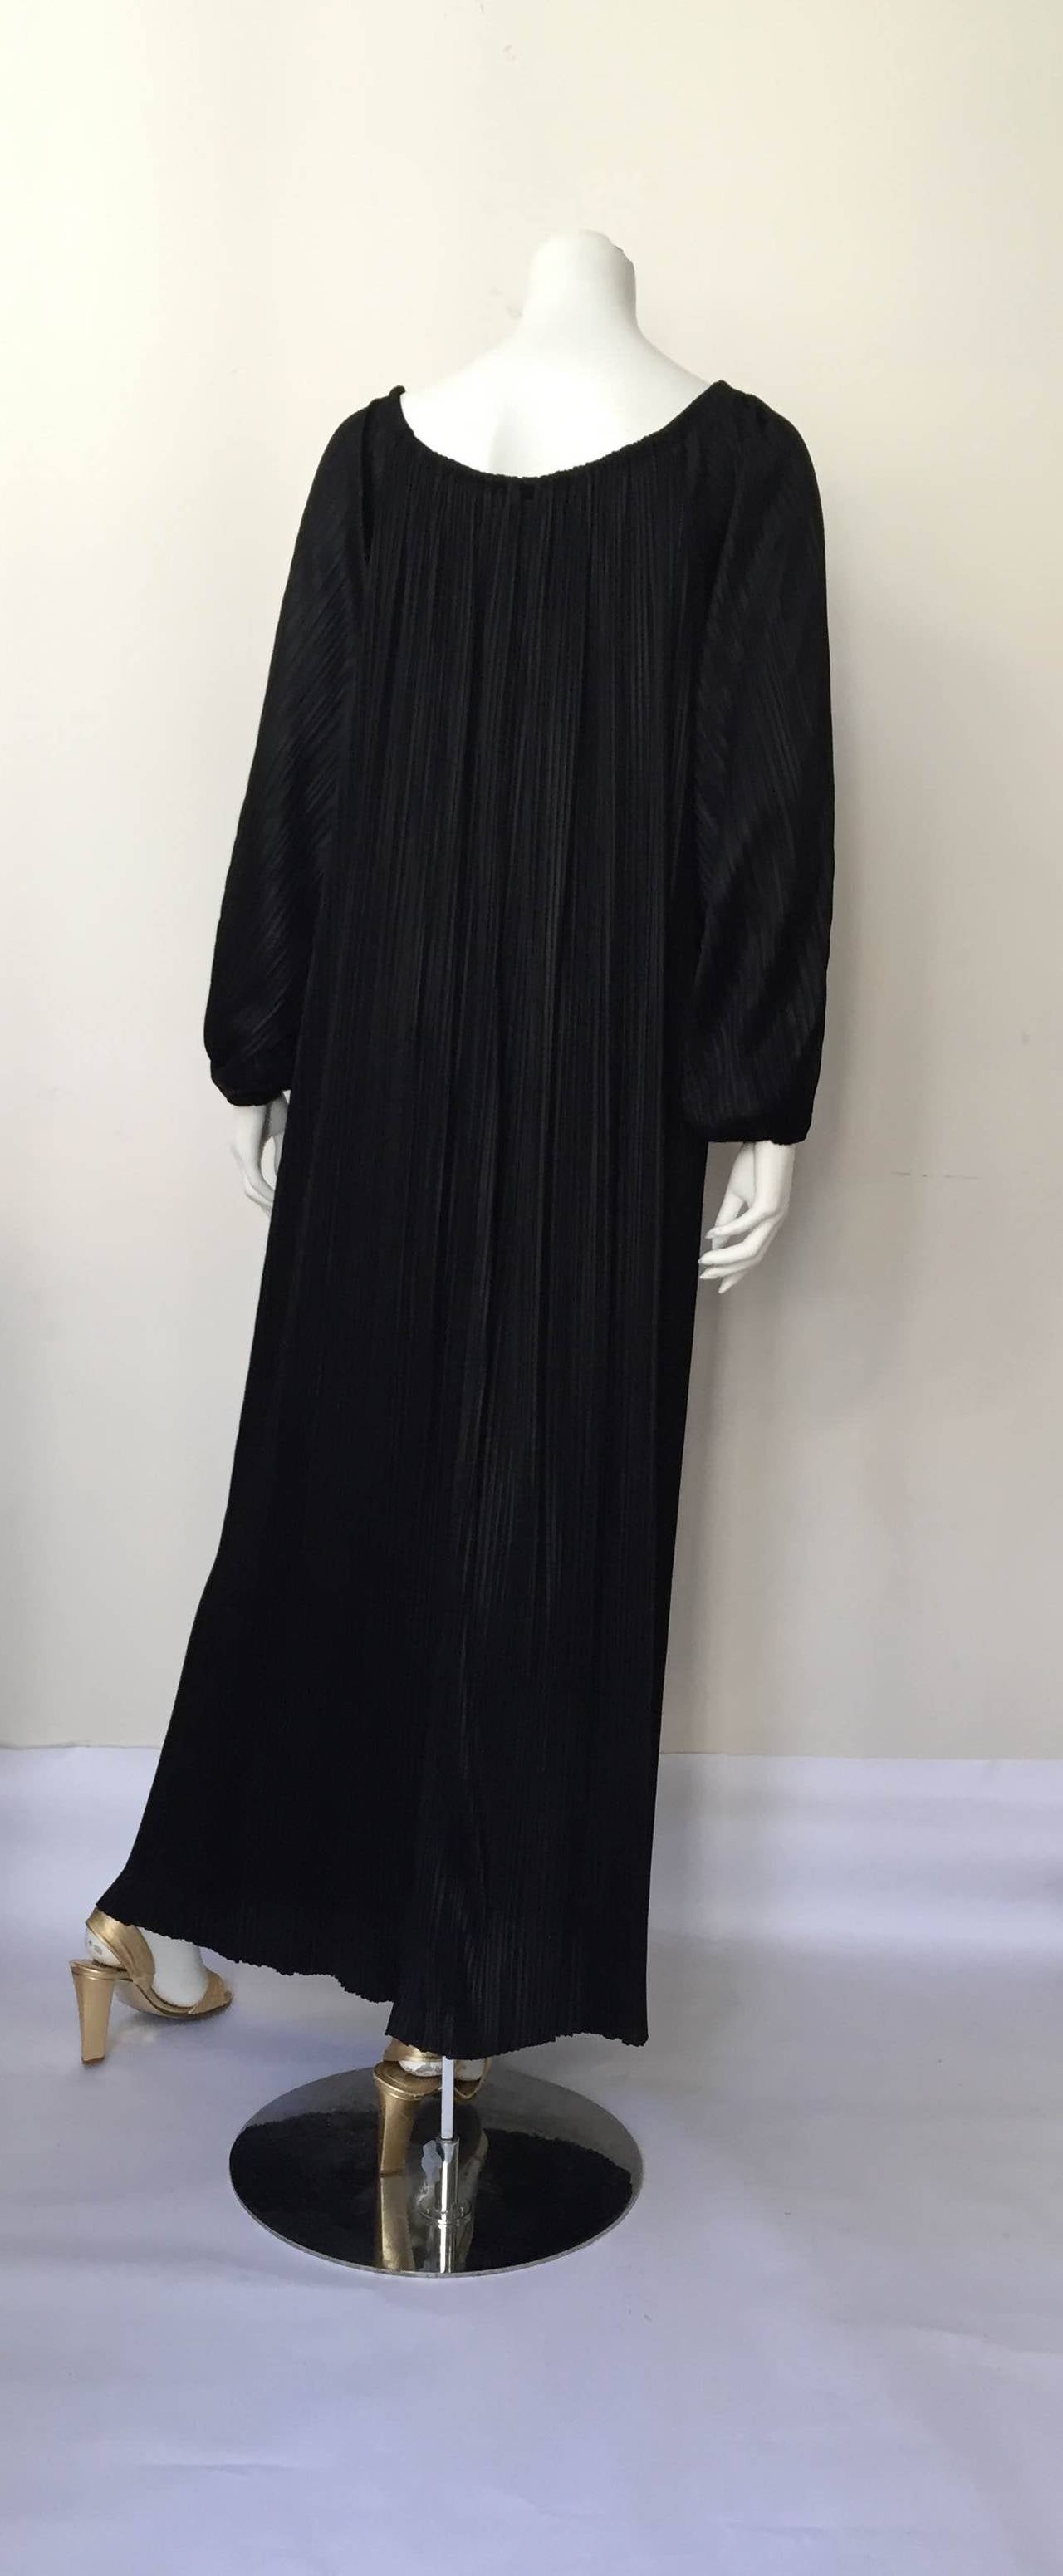 Women's Halston IV 70s Dorian for Sak's black caftan / loungewear fits size 6.